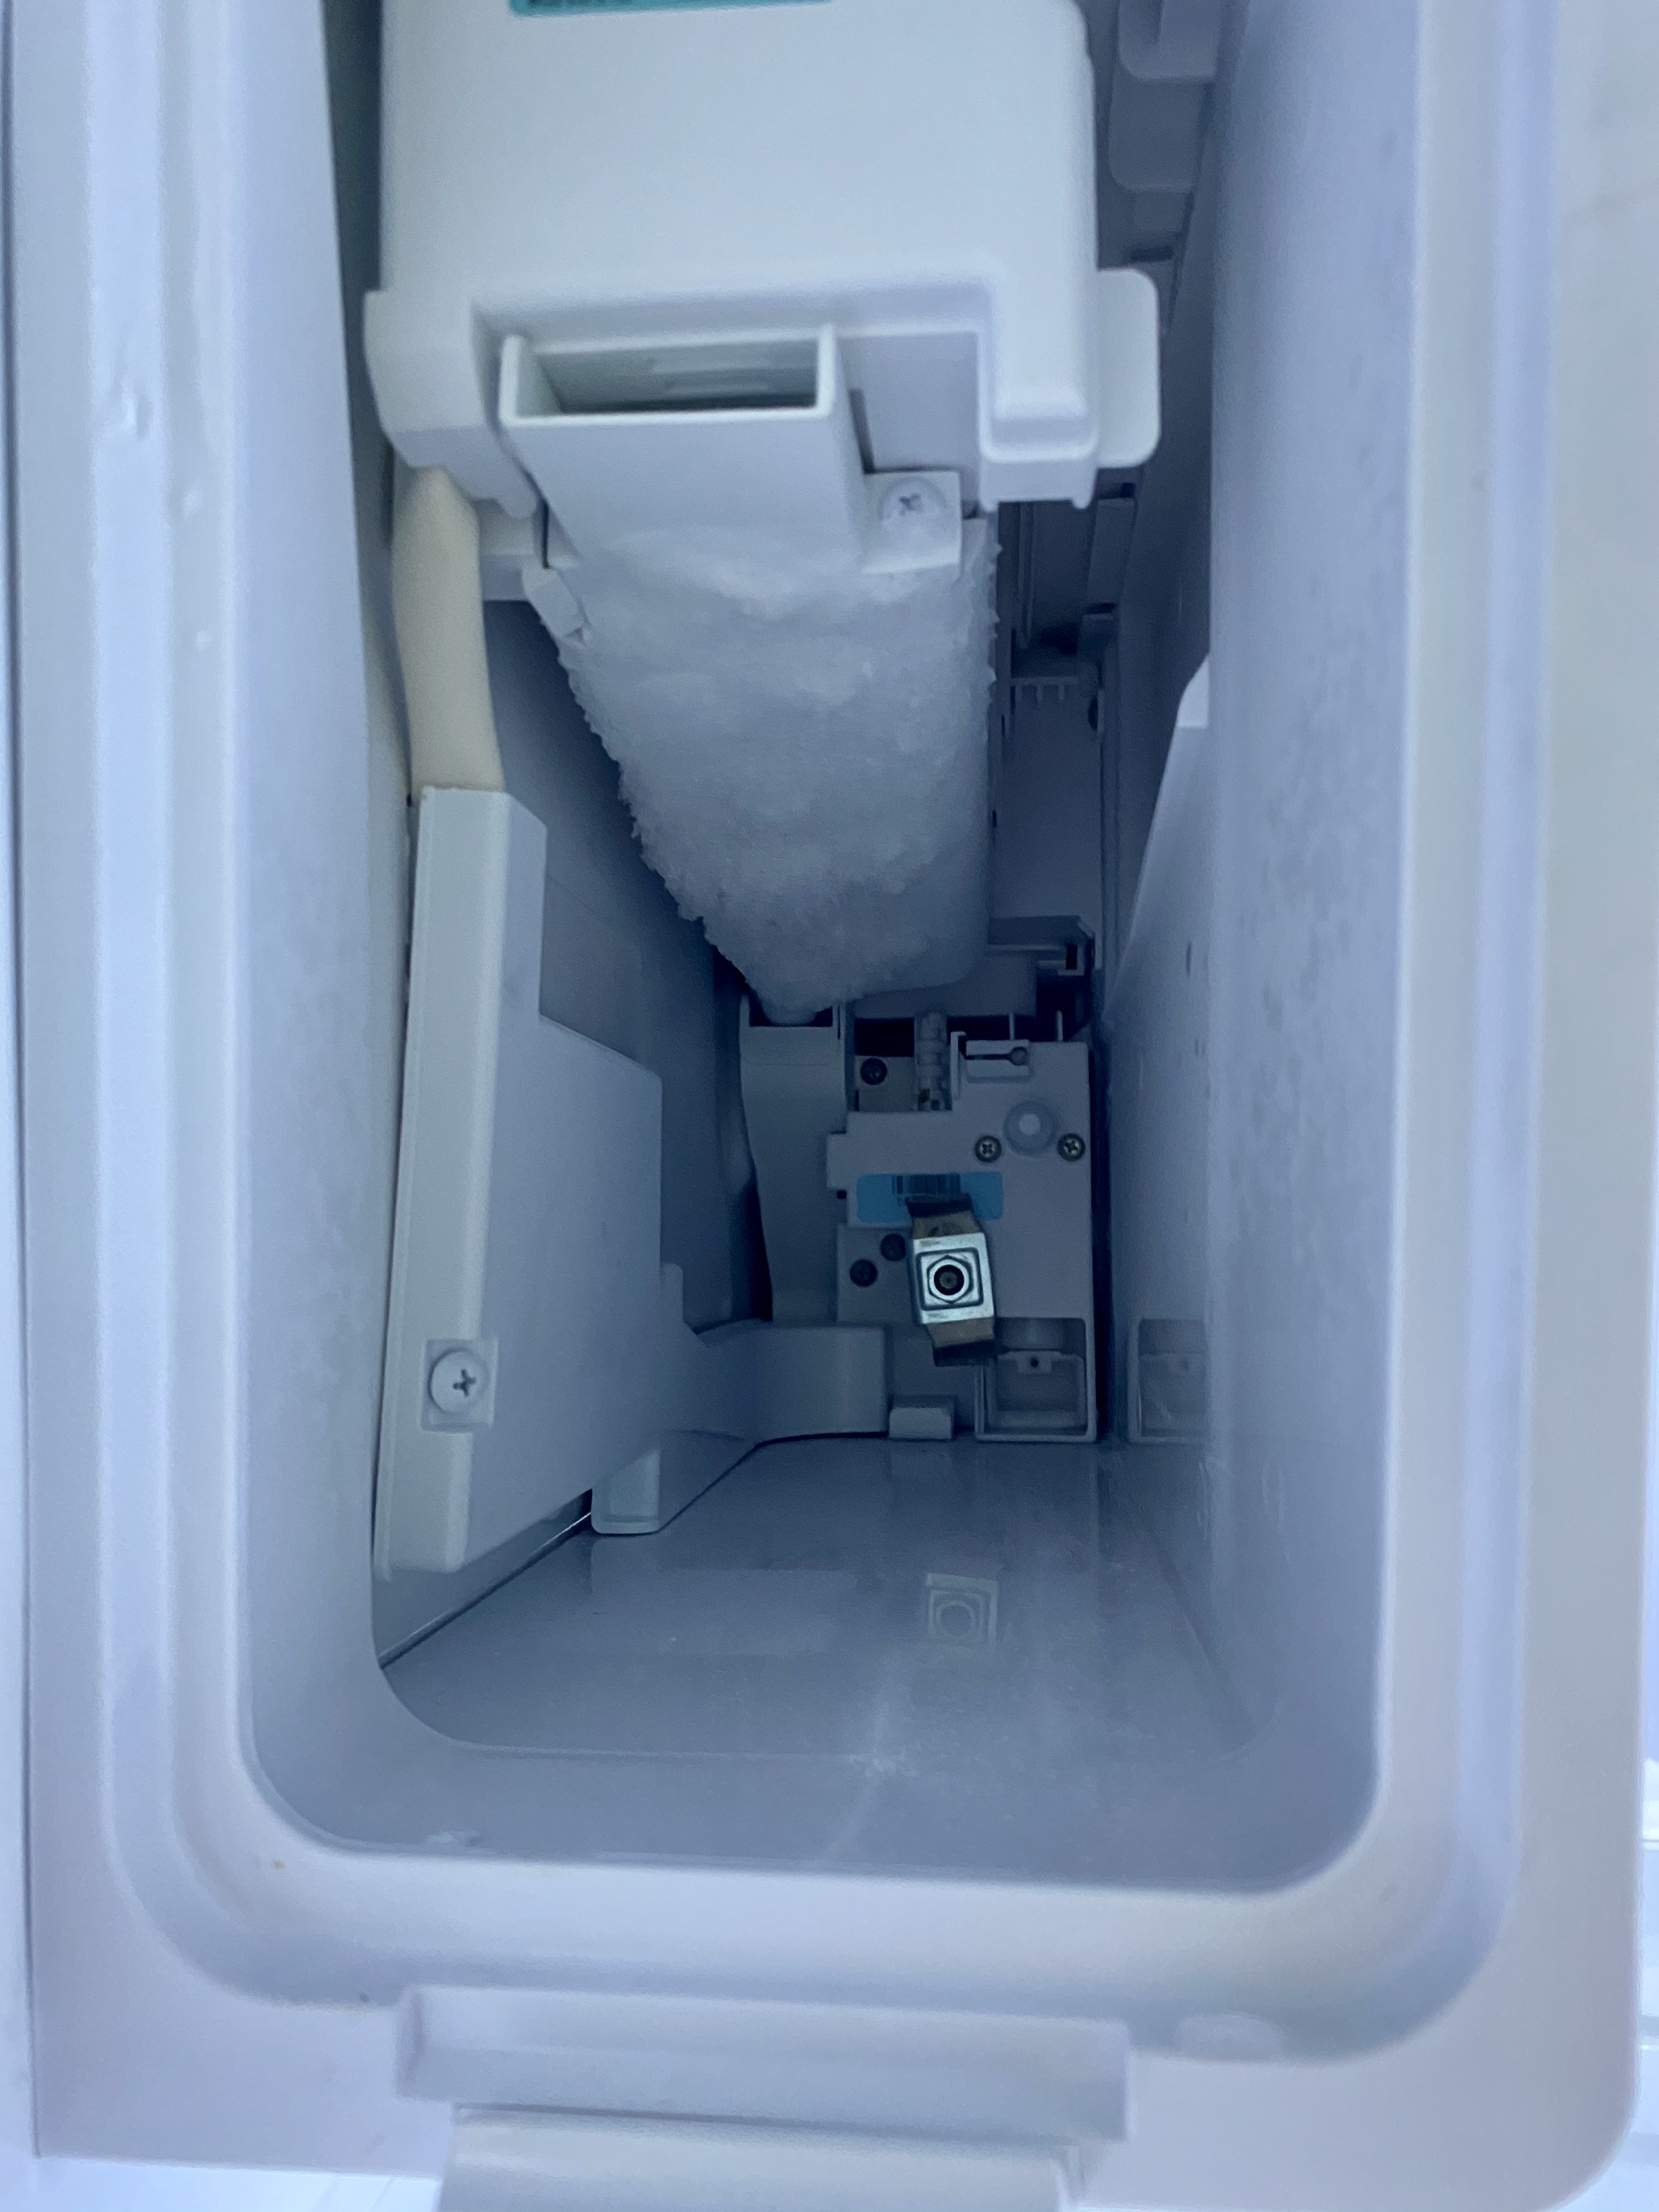 Solved: Refrigerator RF28HFEDTSR problems - Samsung Community - 1274468